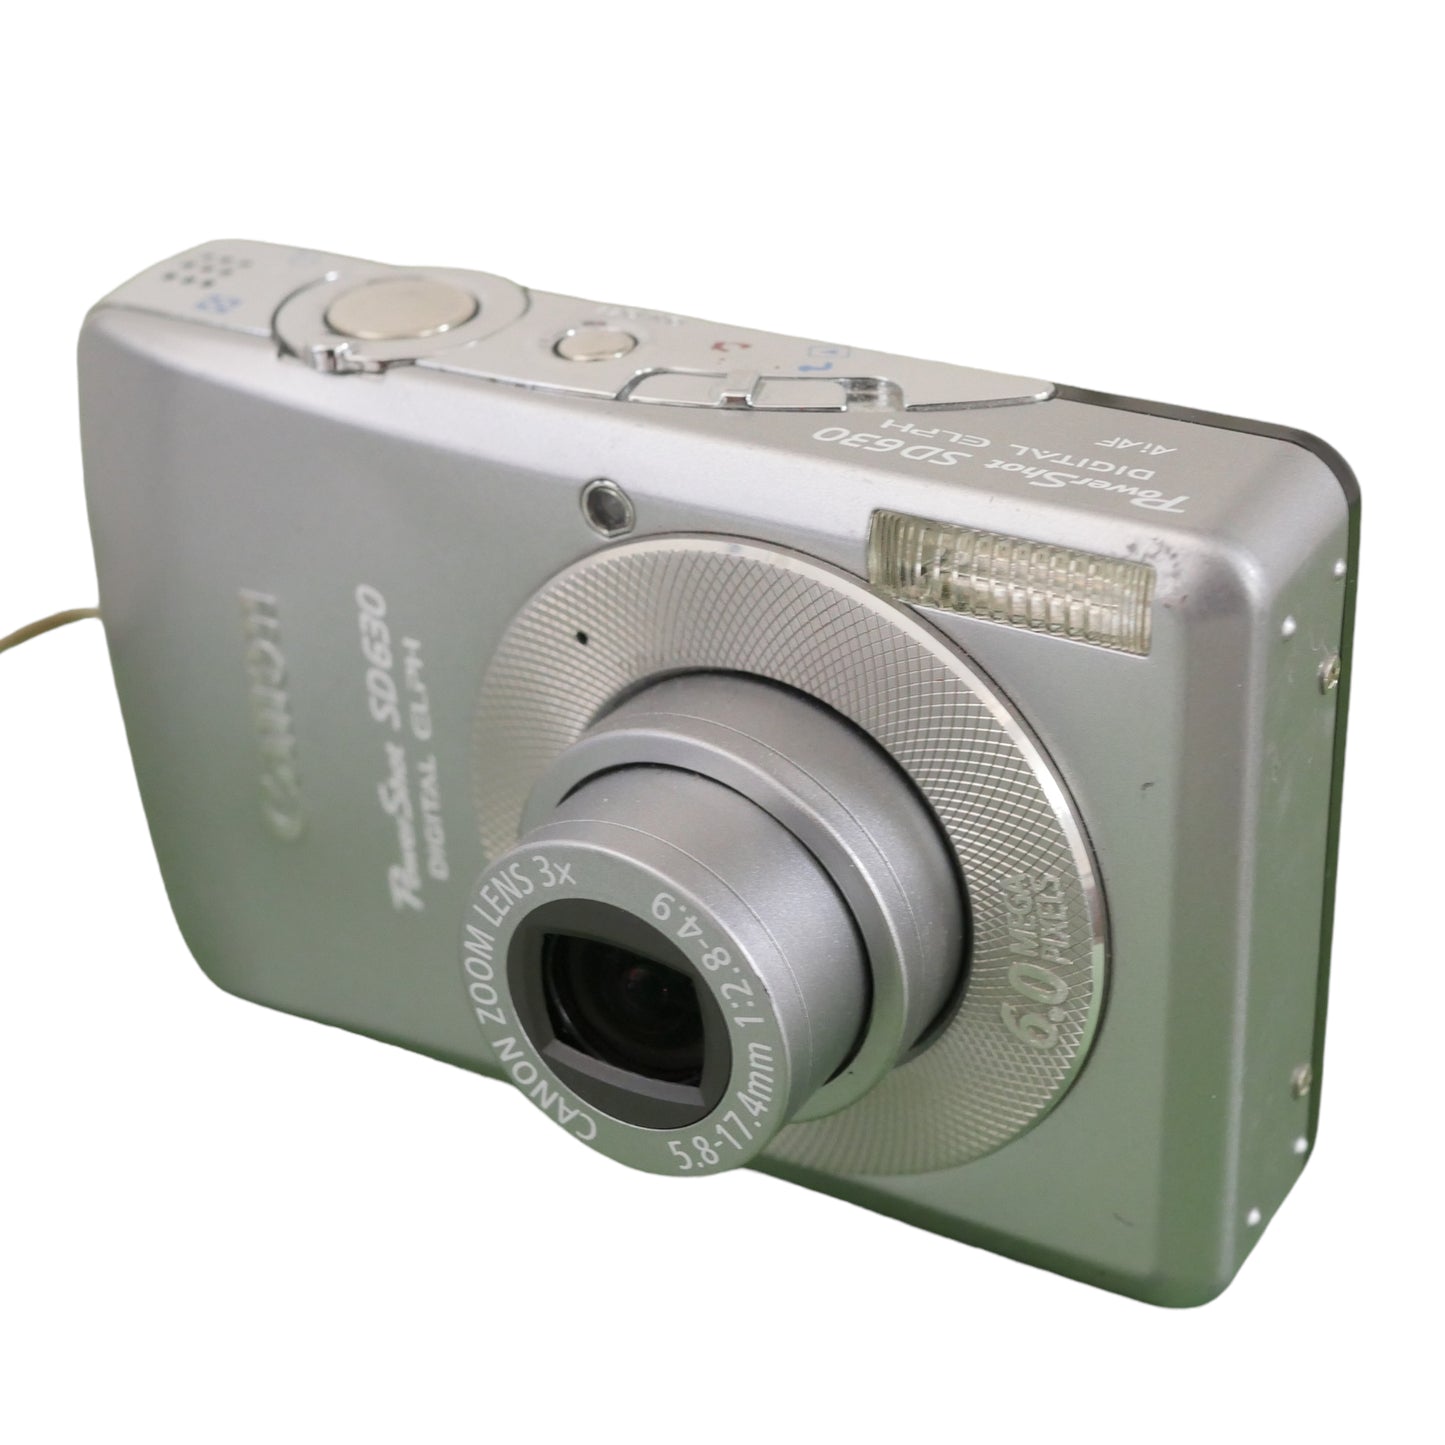 Canon Powershot SD630 - 6.0 Megapixel Digital Camera